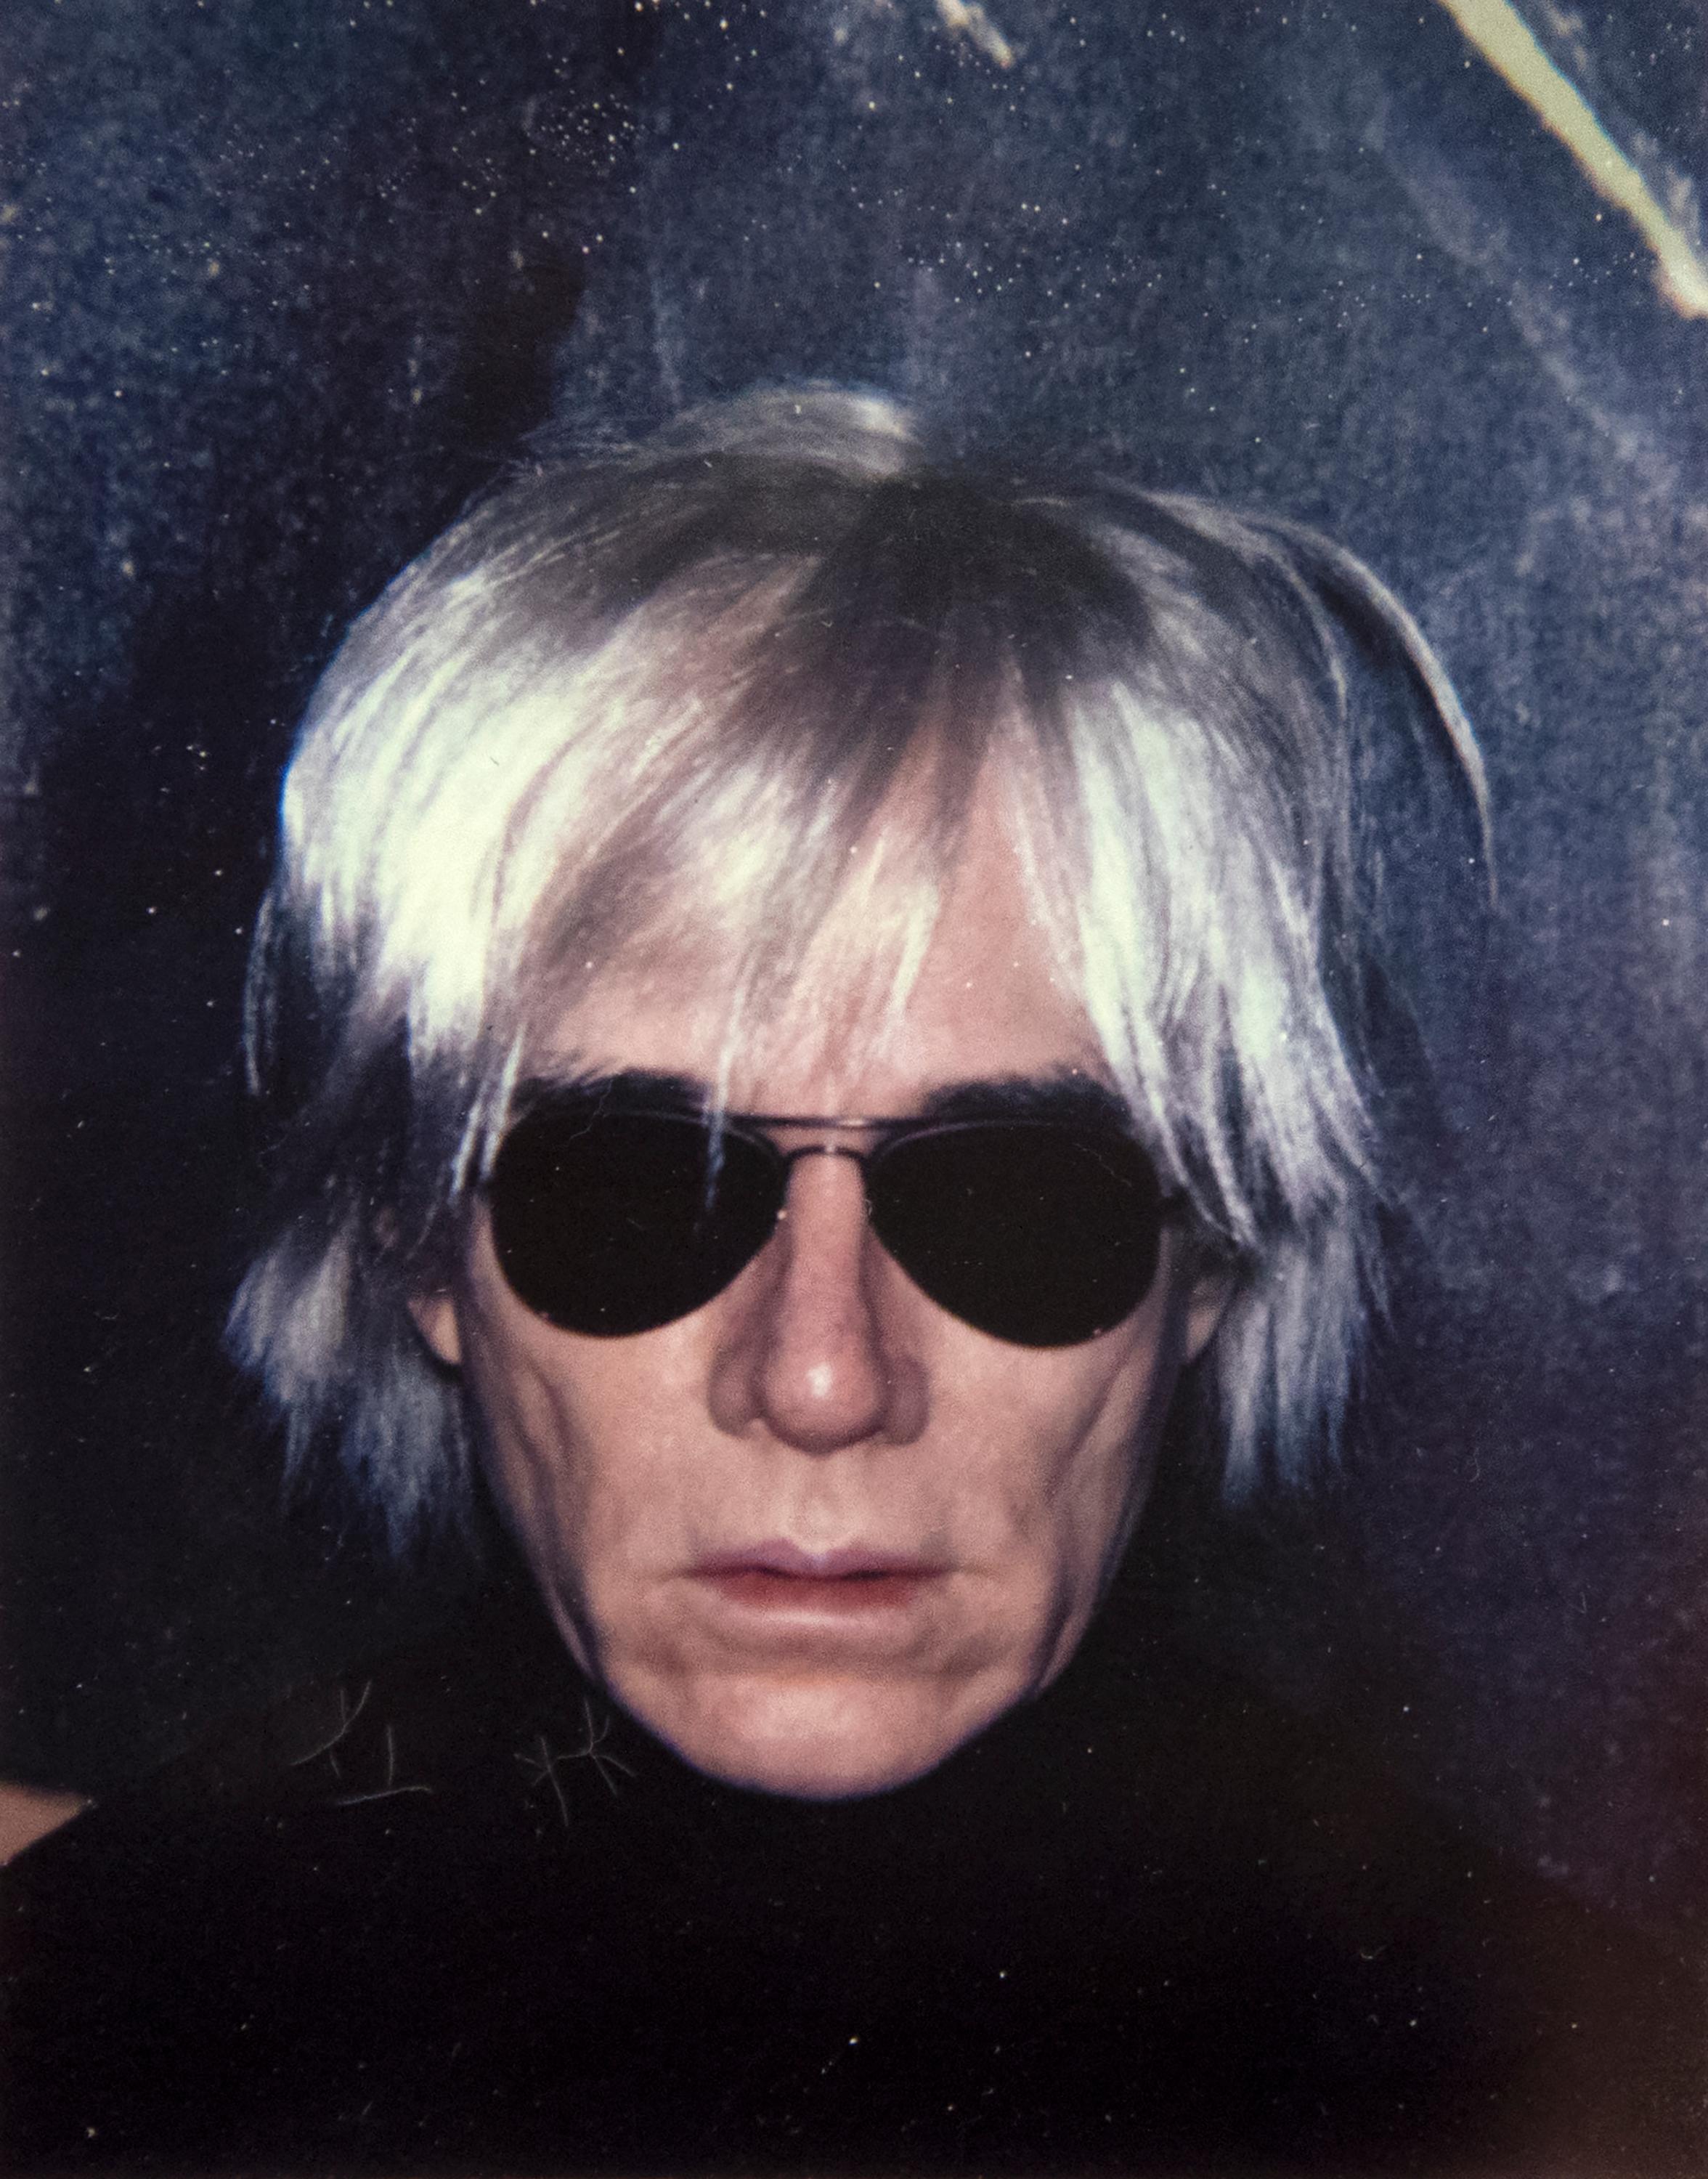 Andy Warhol Color Photograph - Self-Portrait